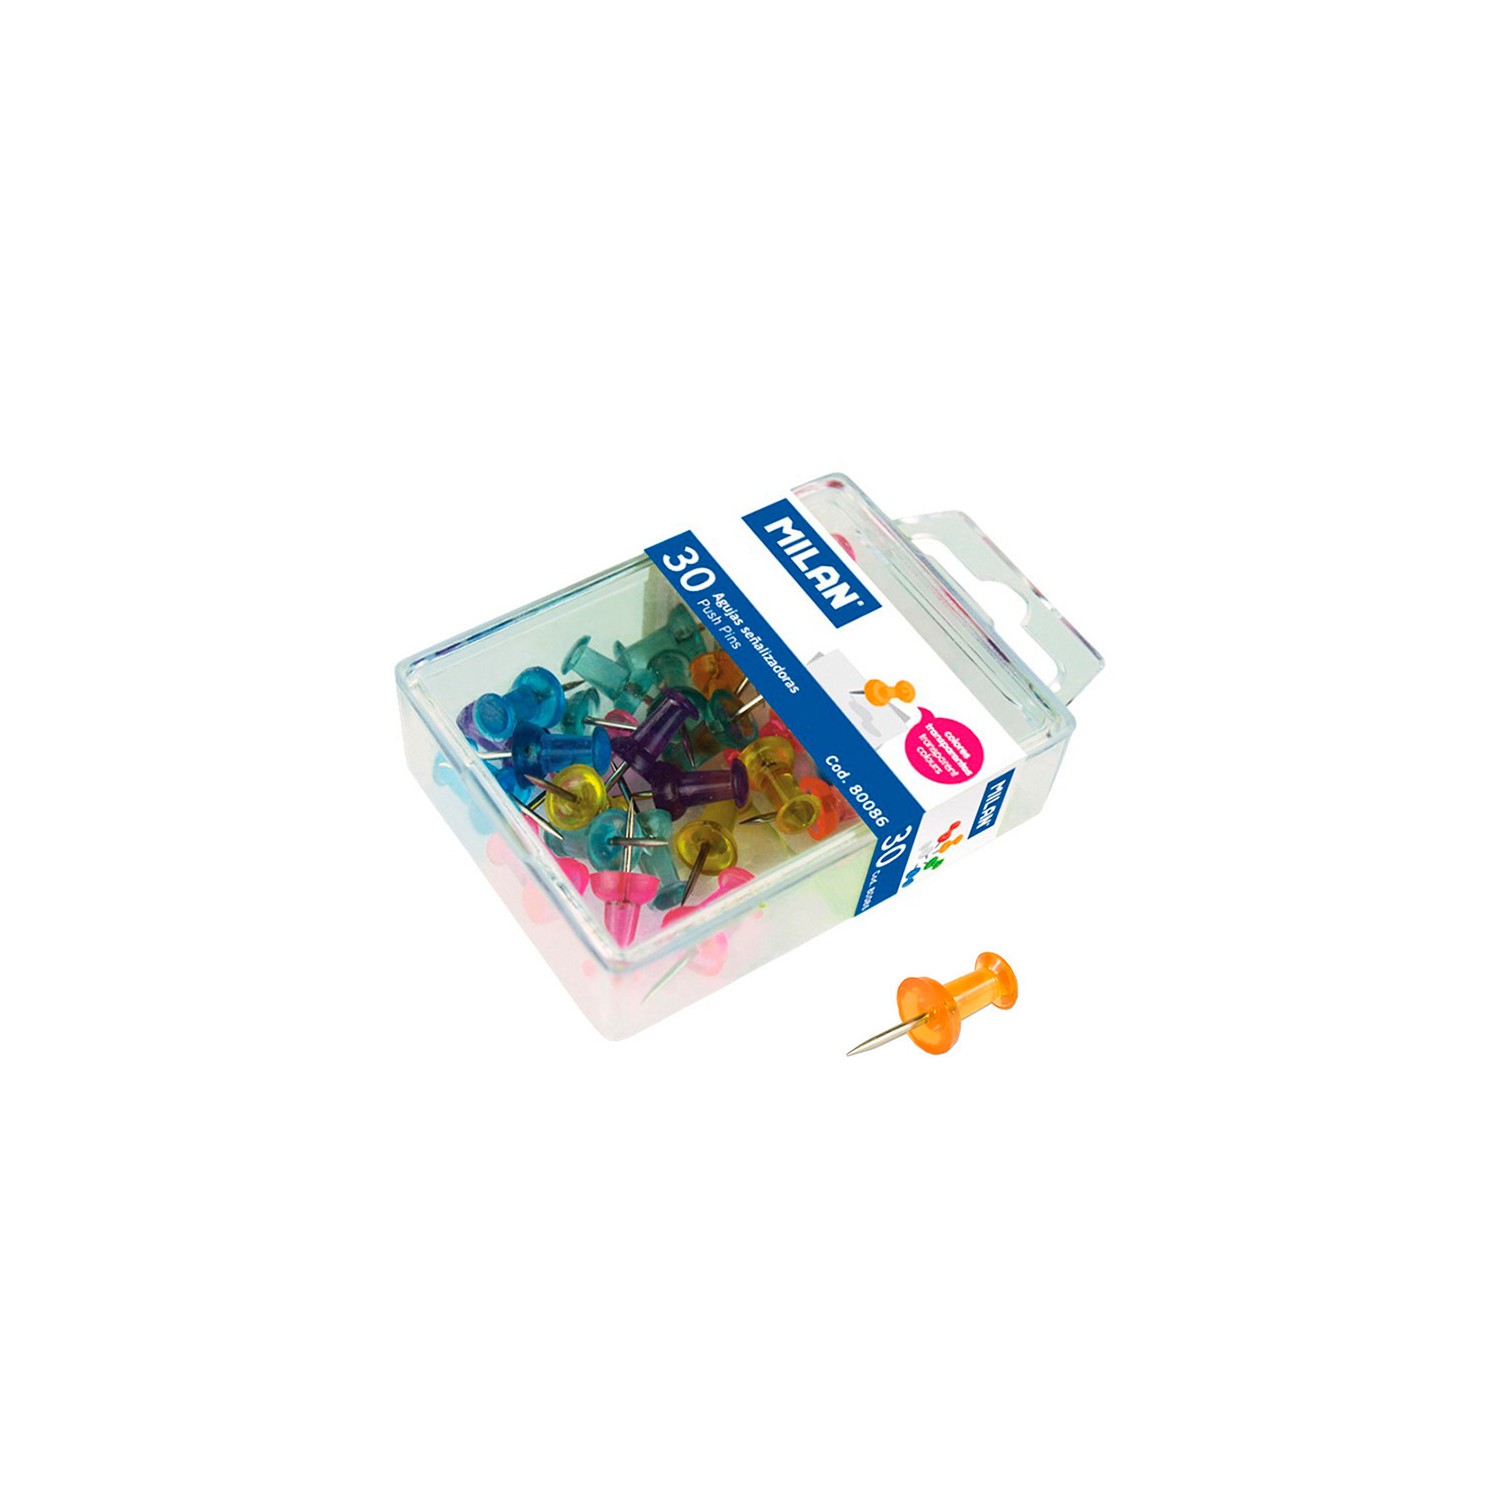 Caja con 30 agujas señalizadoras en colores milan